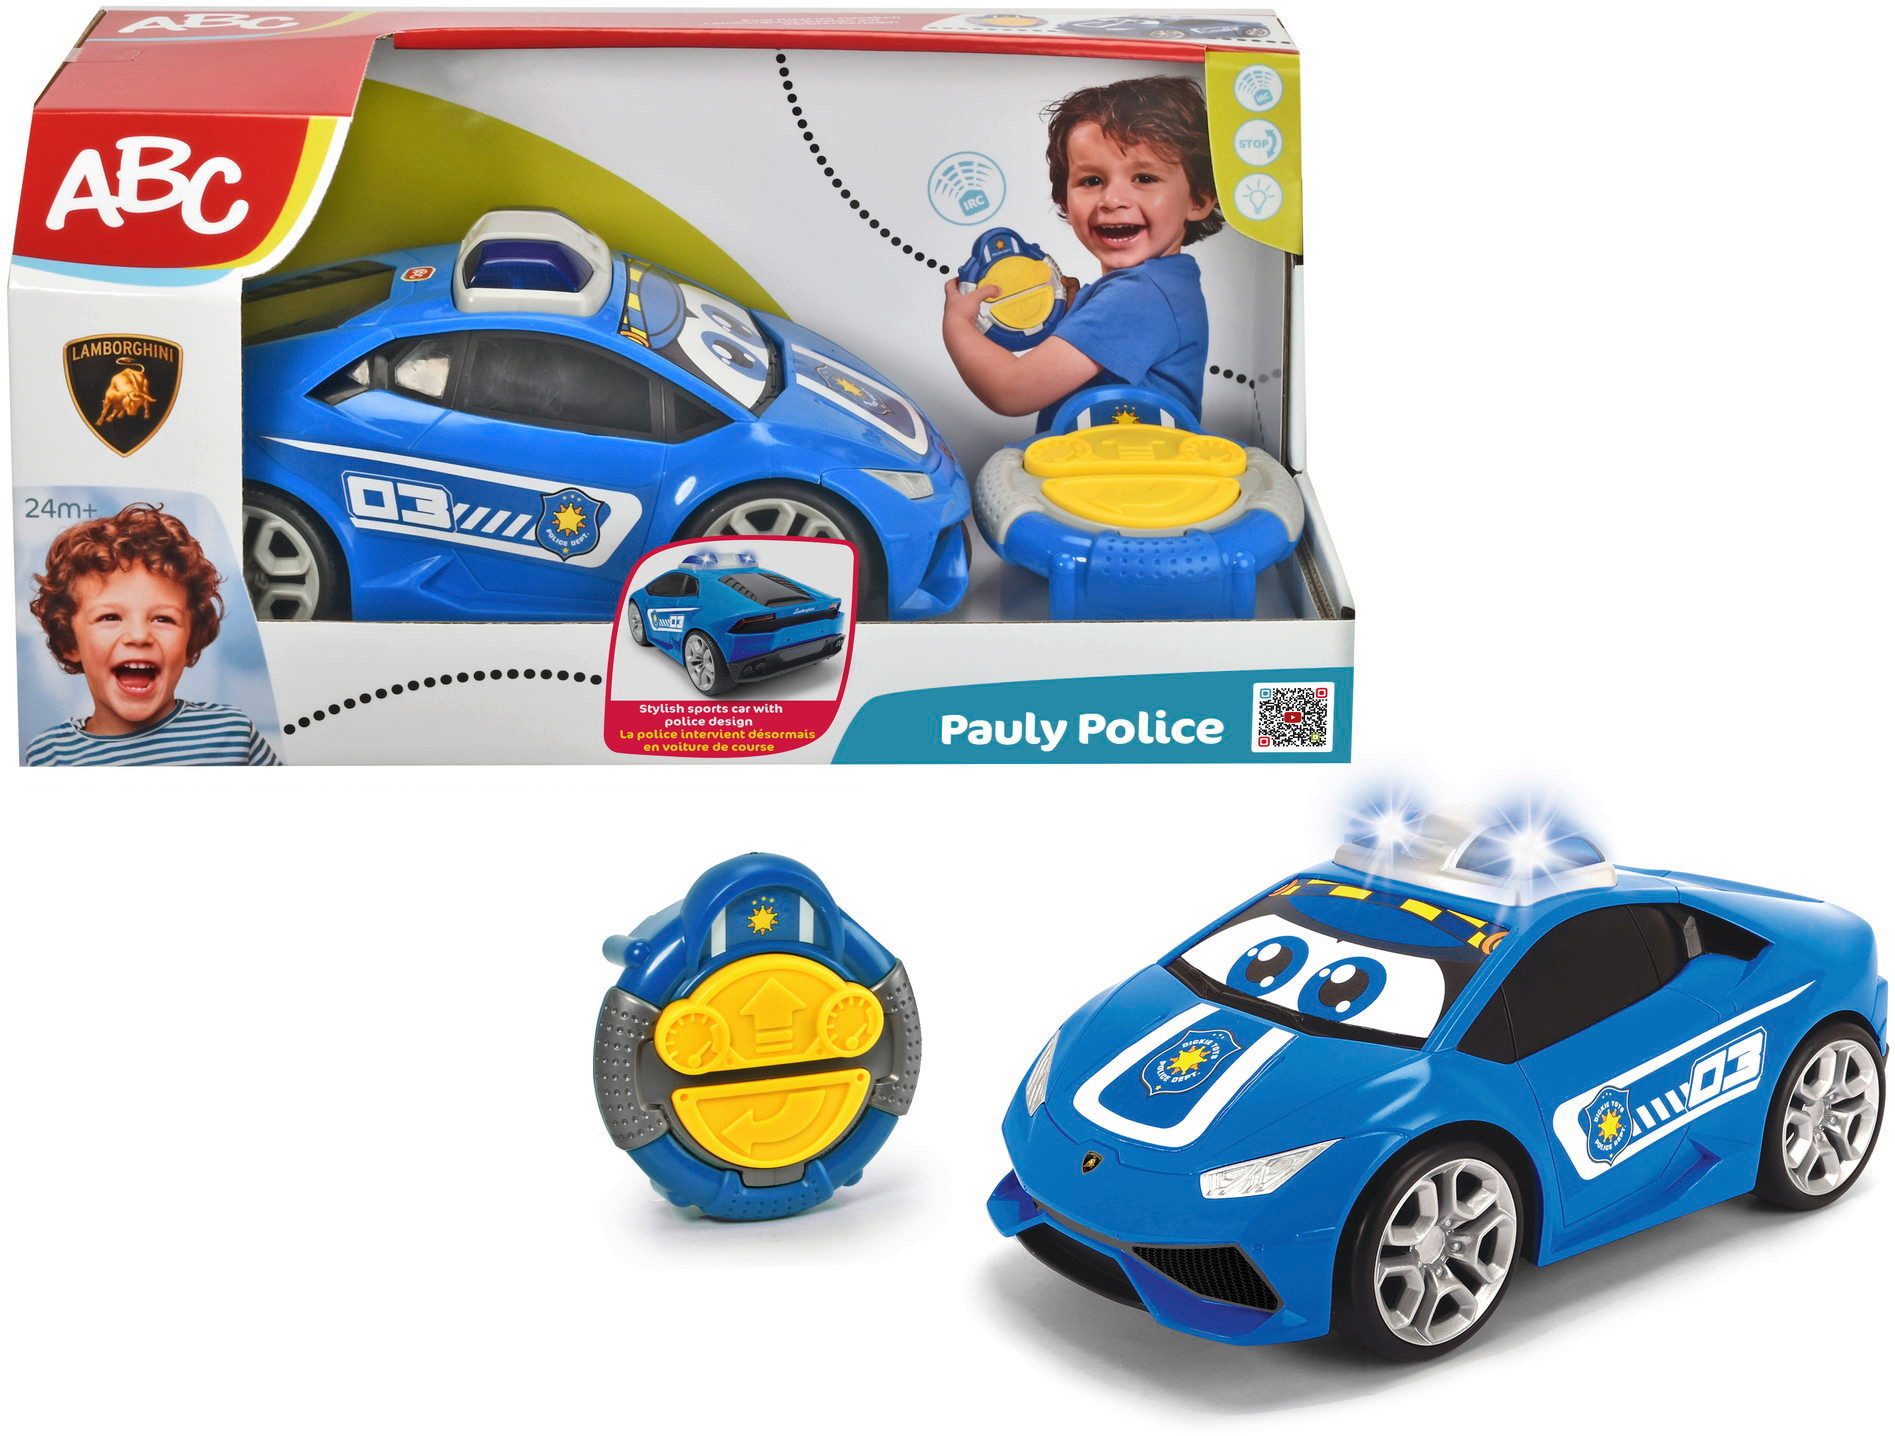 ABC-Dickie-Simba Spielzeug-Feuerwehr ABC Kleinkindspielzeug ferngesteuertes Auto ABC IRC Paul Polizei Auto